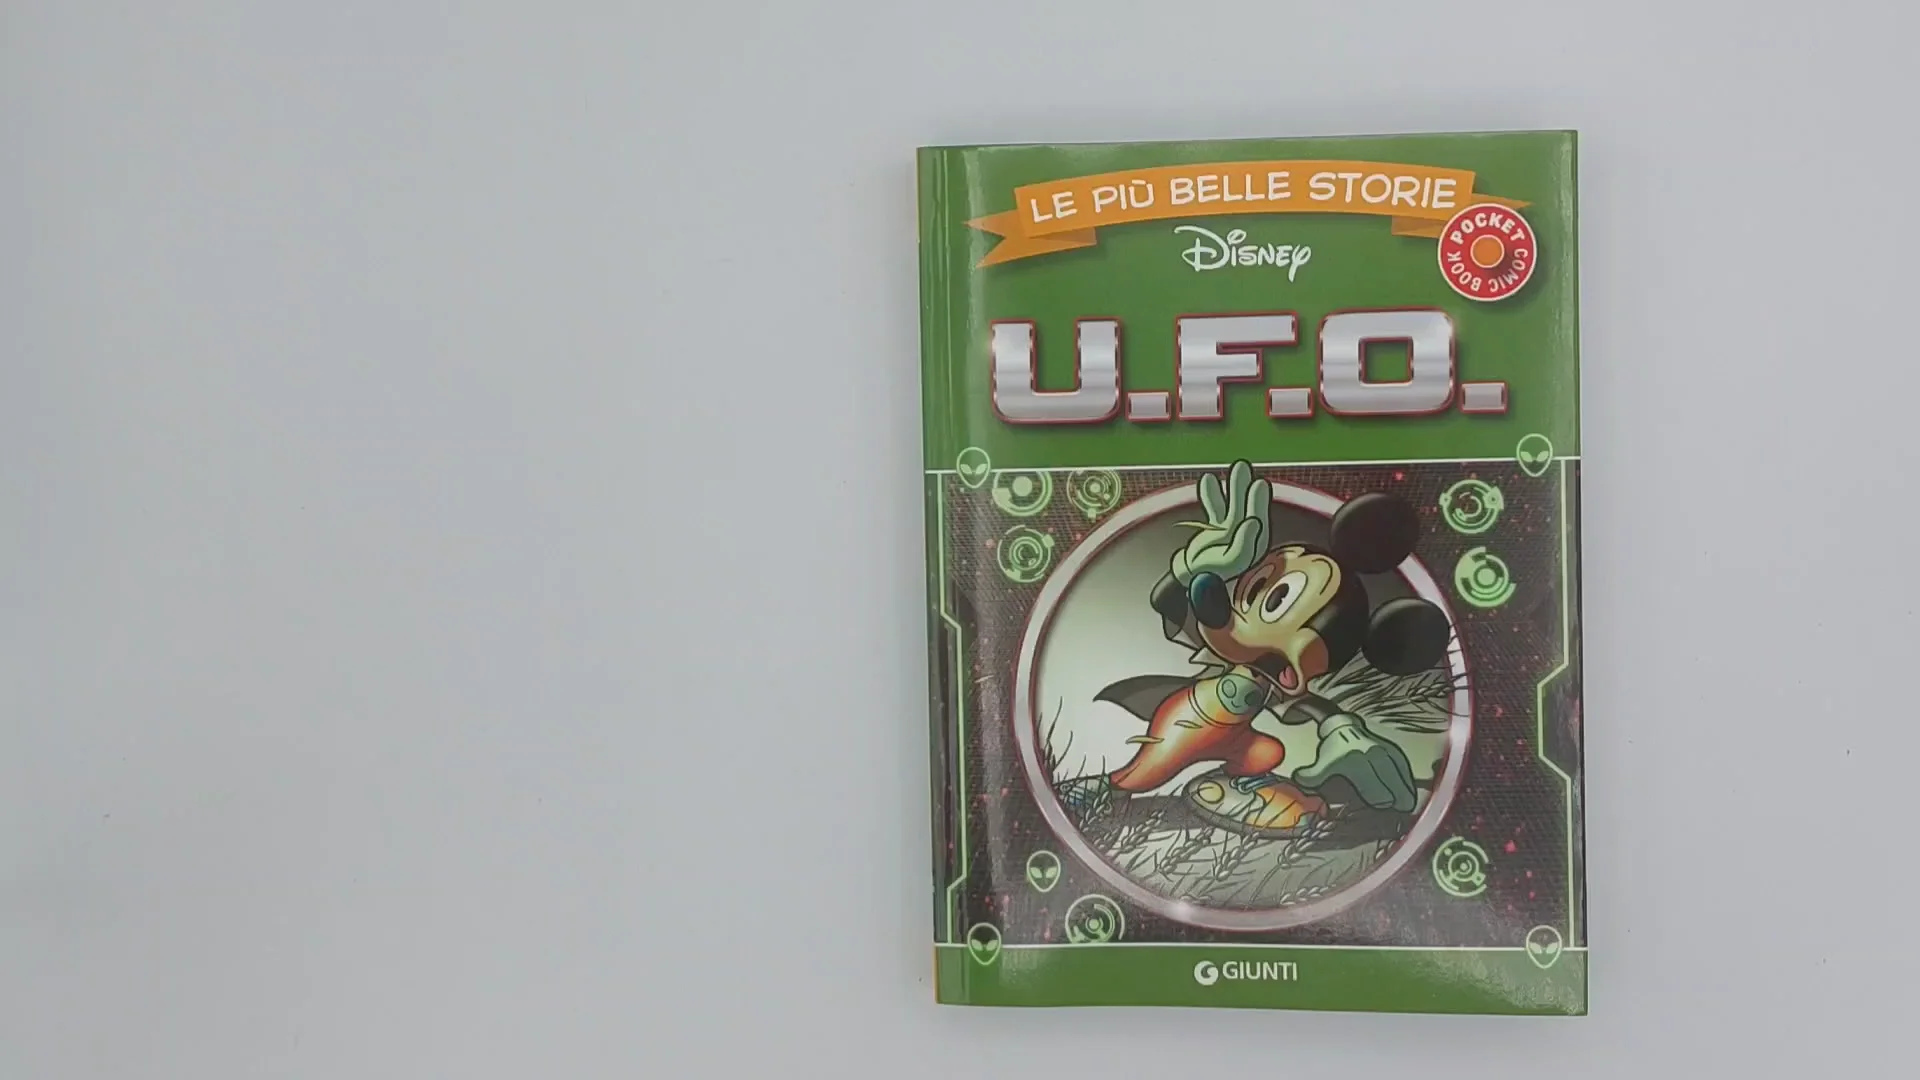 UFO - Le più belle storie Disney Pocket on Vimeo